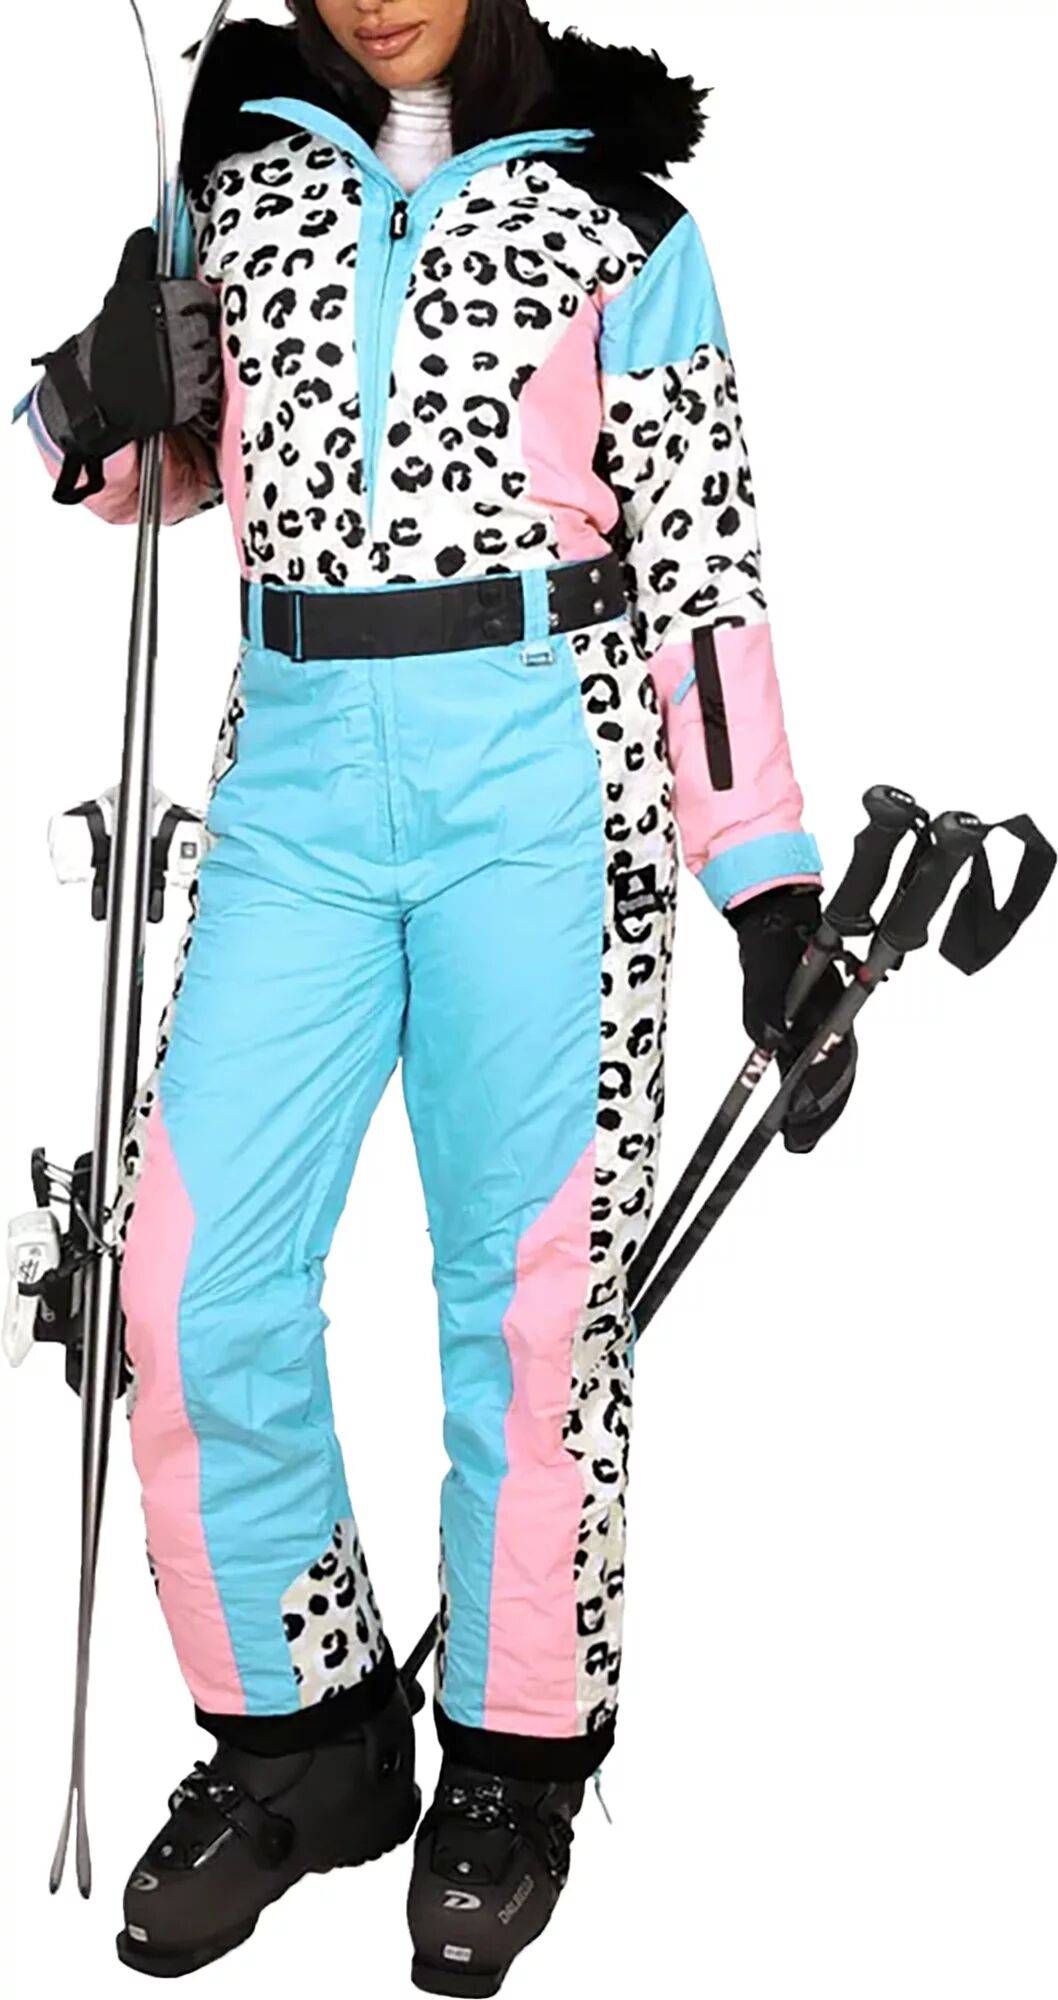 Photos - Ski Wear Leopard Tipsy Elves Women's Snow  Ski Suit, Medium, Blue 23dbpwwsnwlprdsksw 